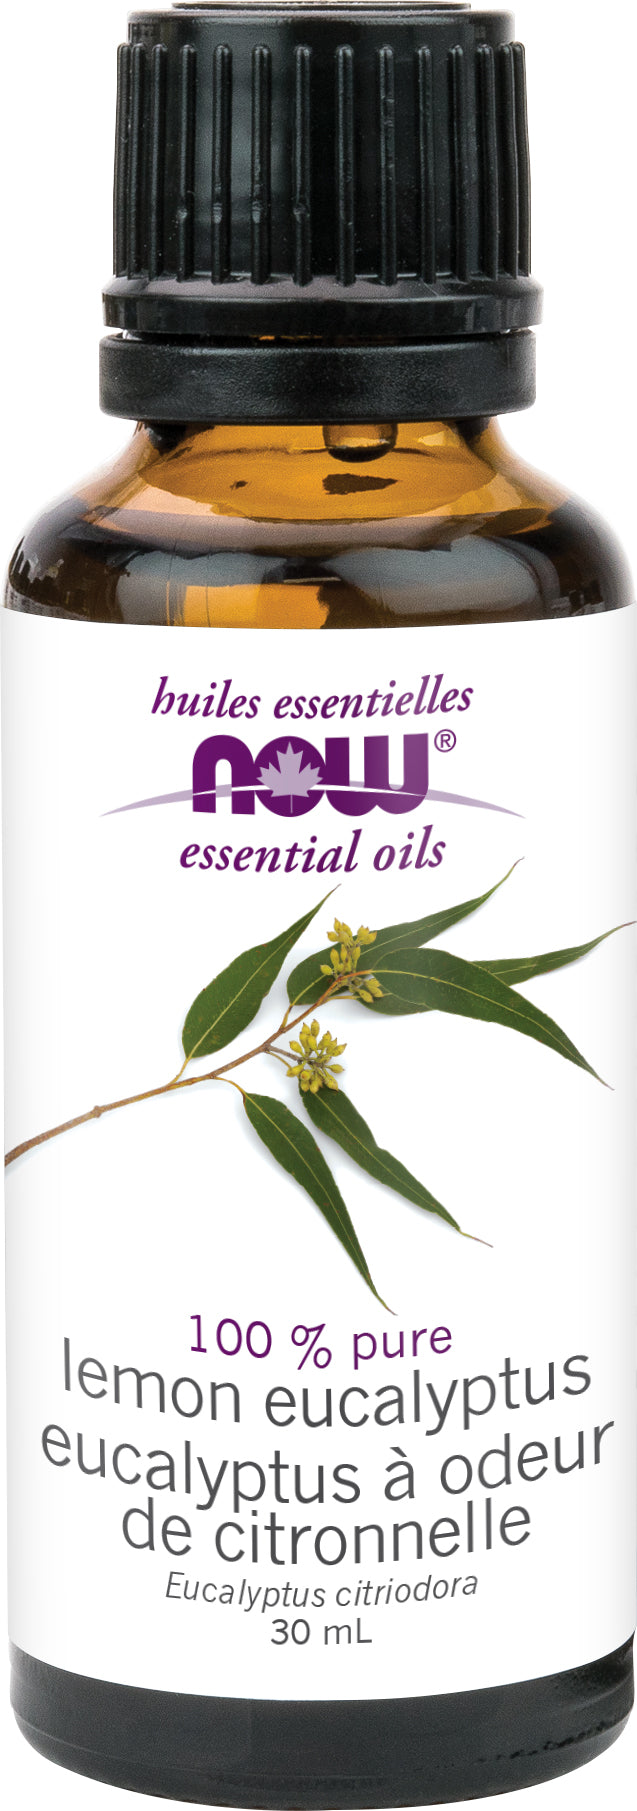 NOW 100% Pure Lemon Eucalyptus Essential Oil 30ml